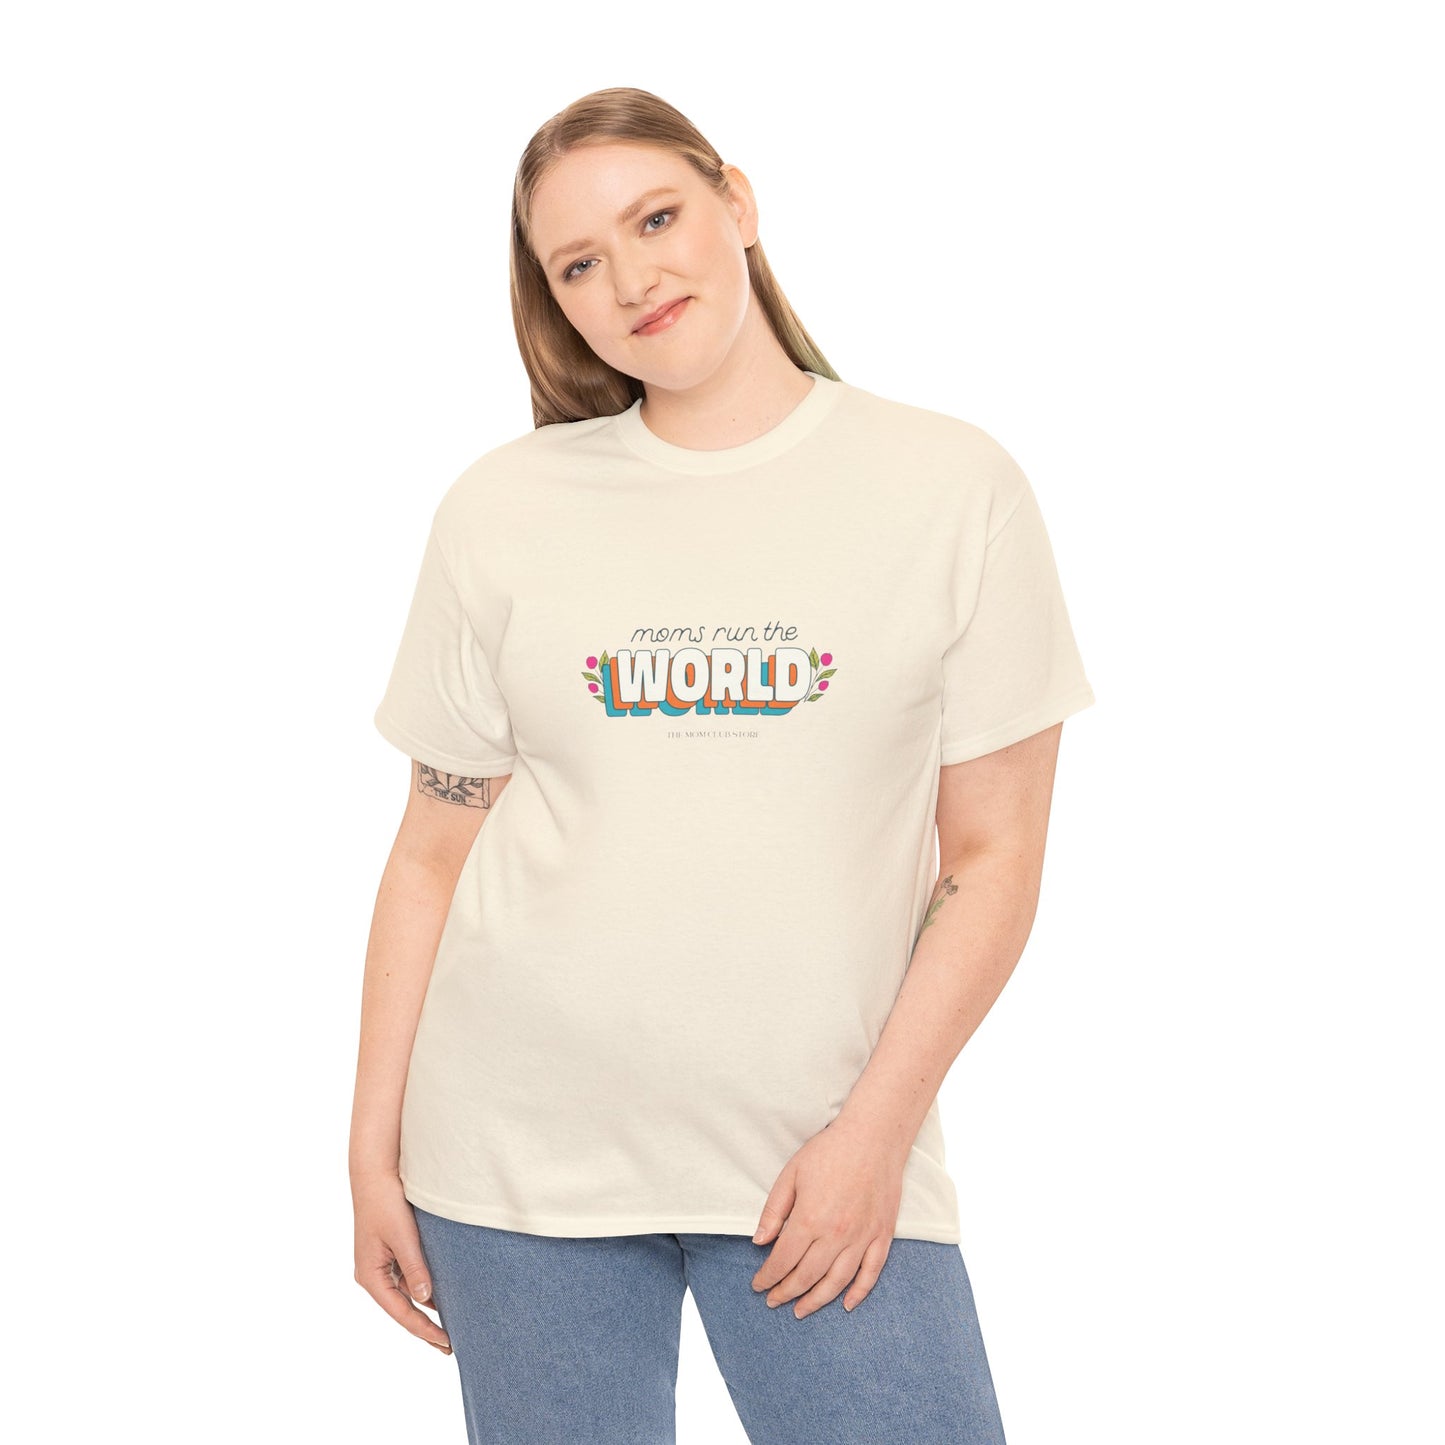 T-shirt MOM runs the WORLD